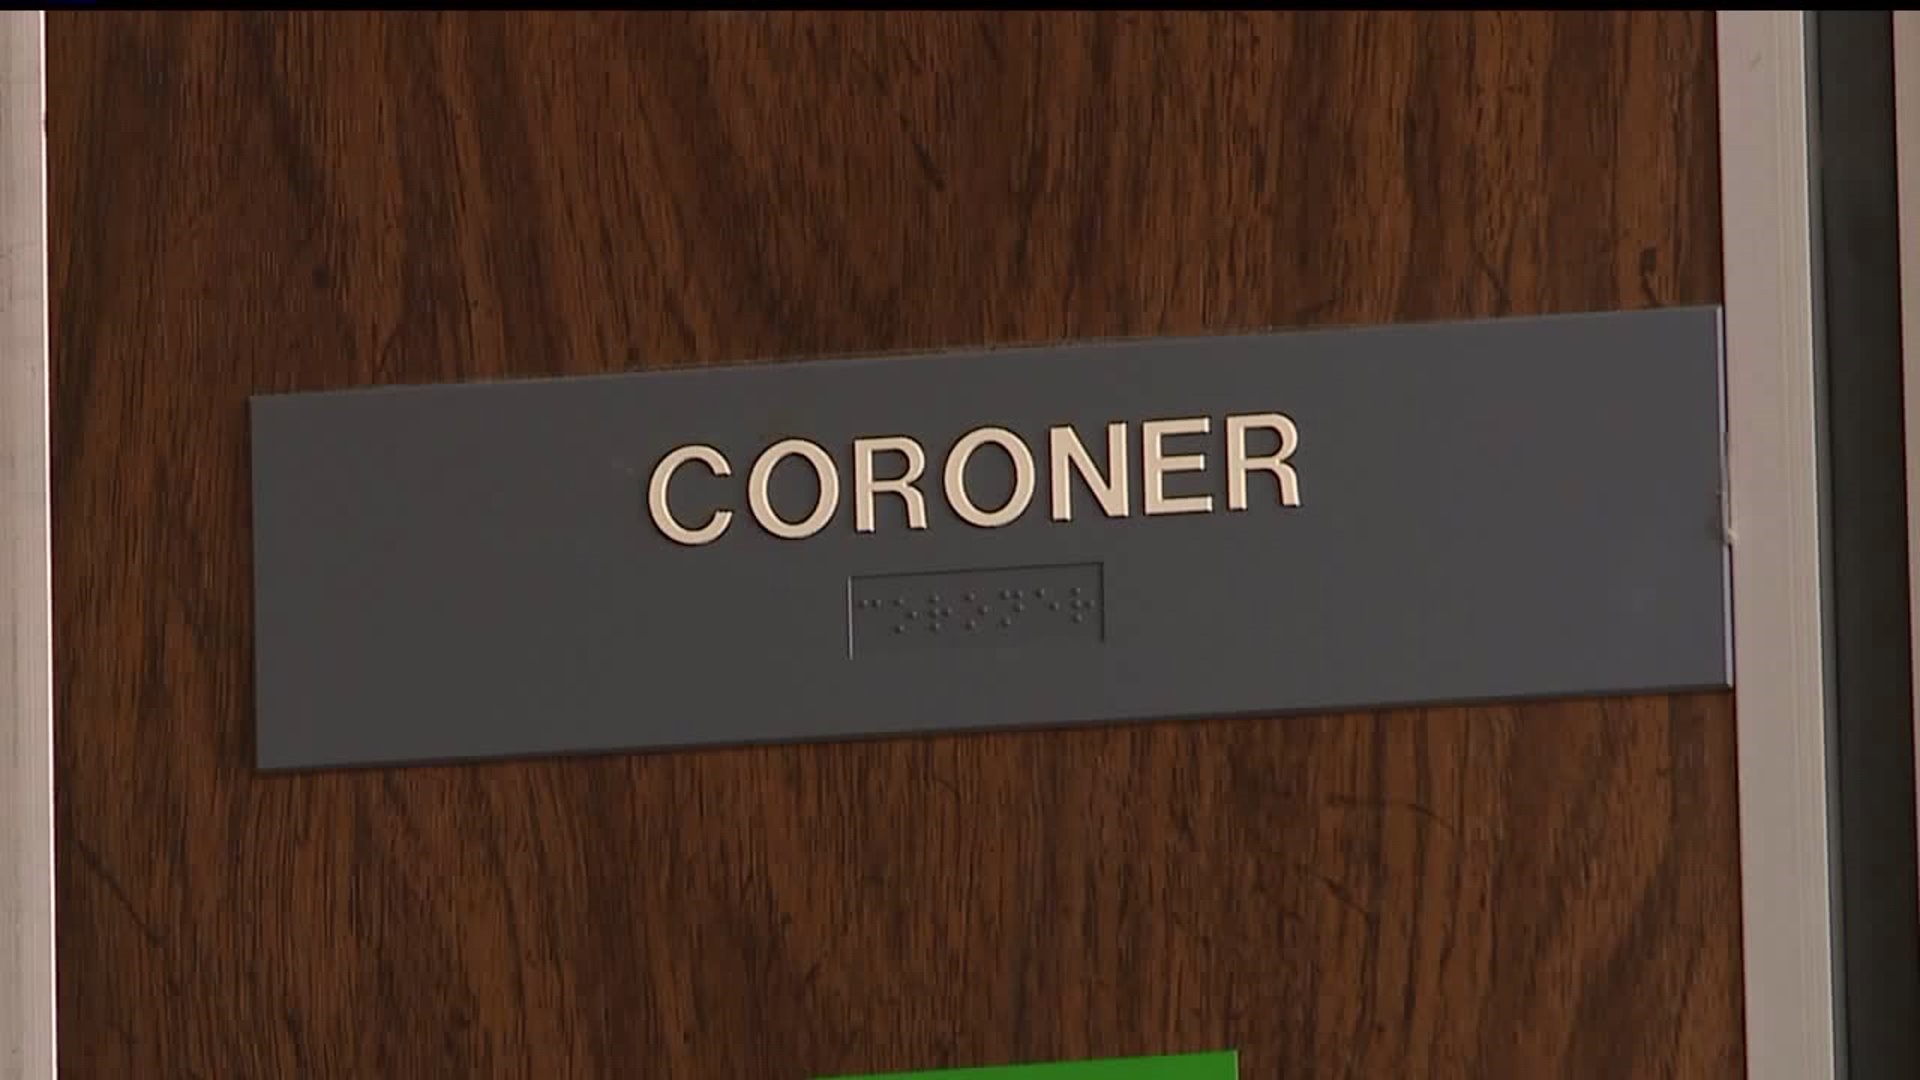 York County needs a morgue, according to coroner